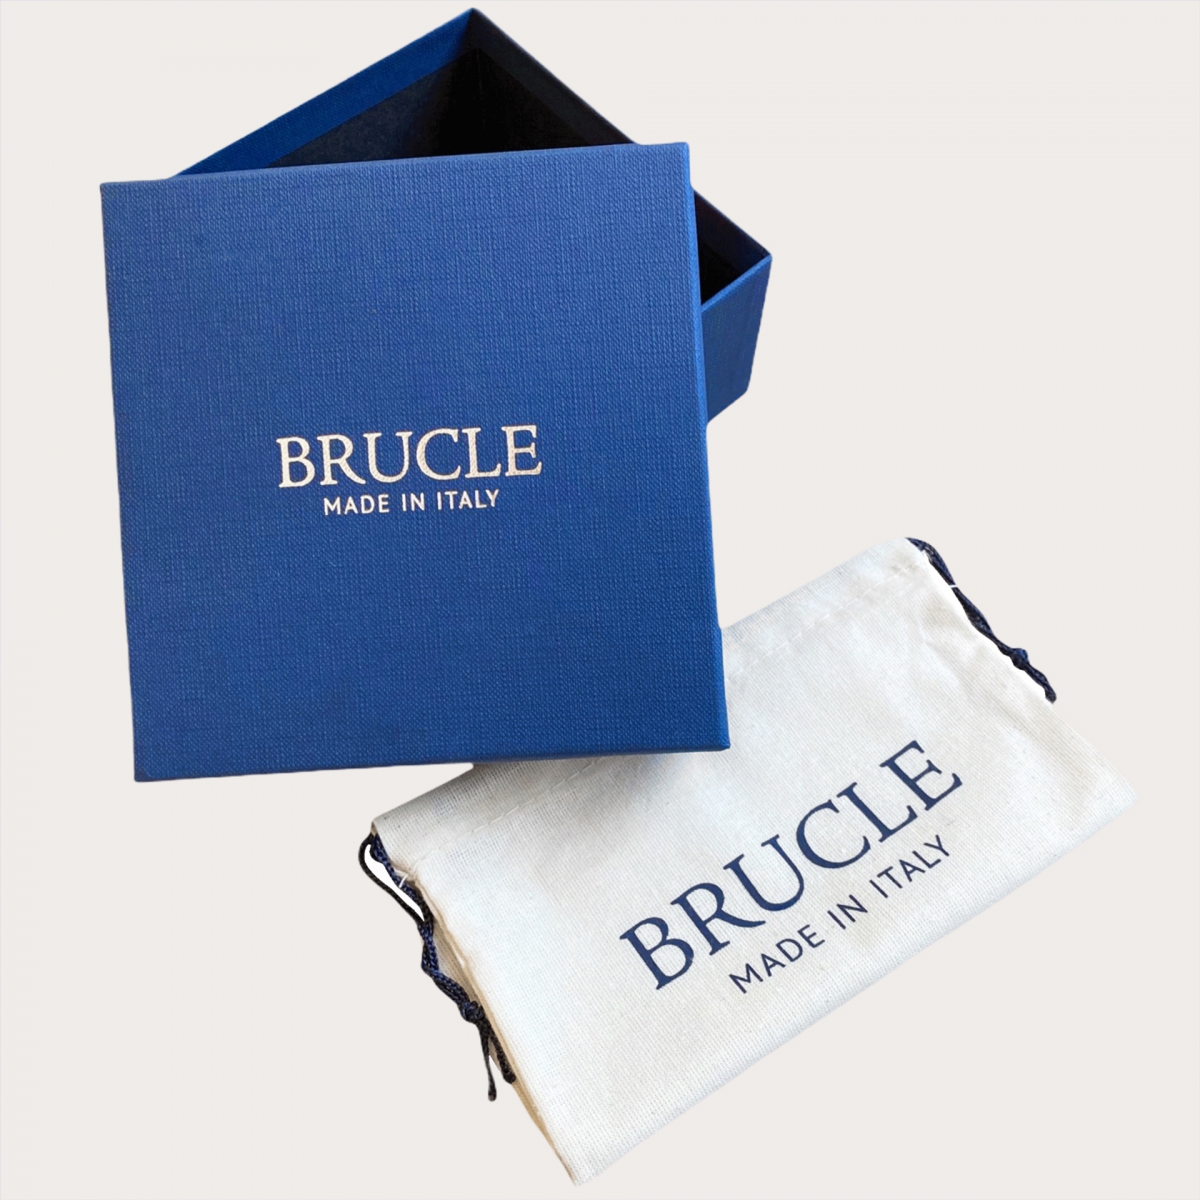 BRUCLE Black suede leather belt